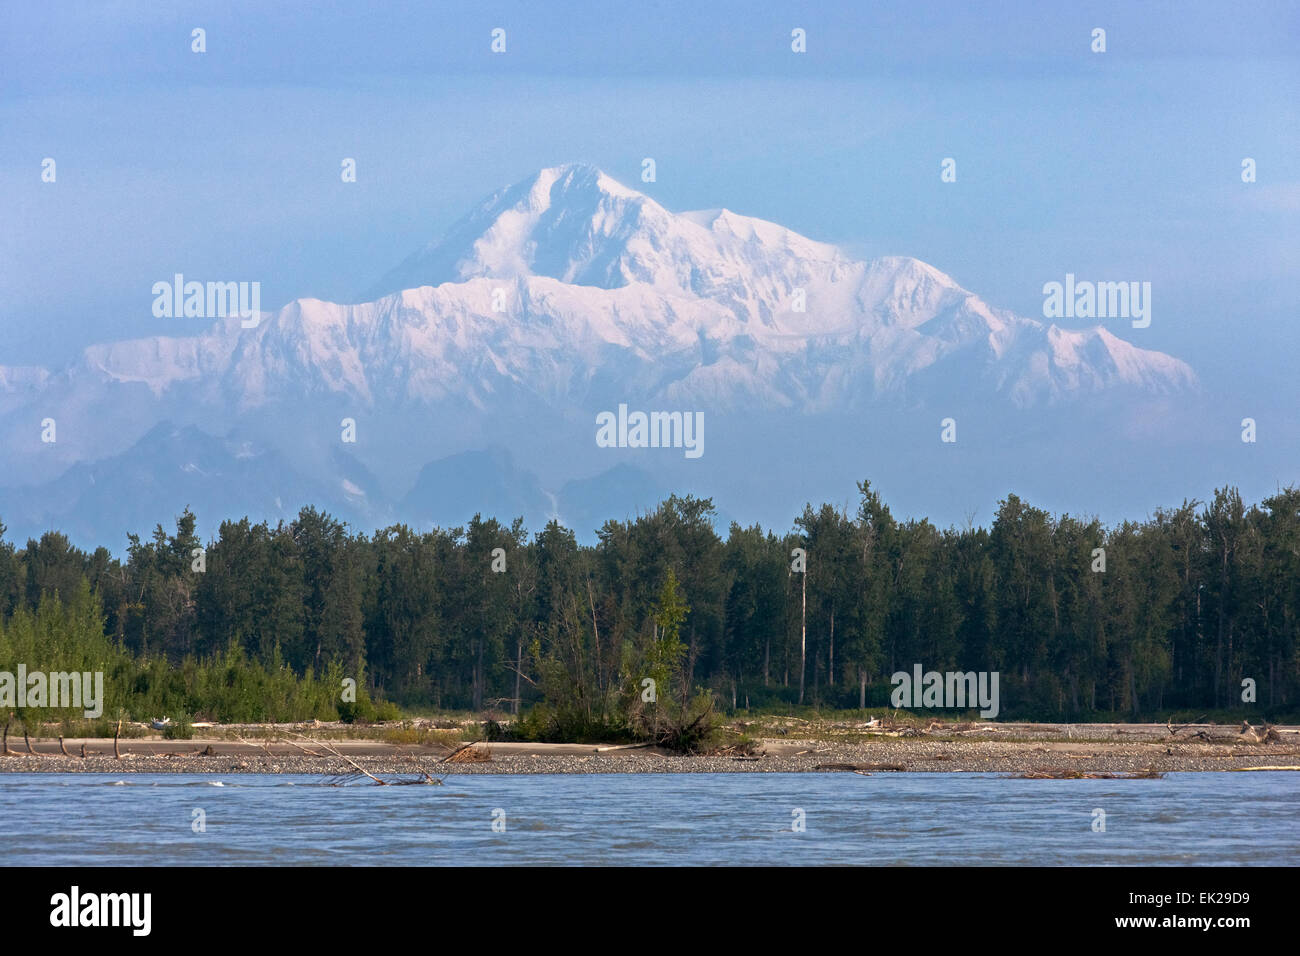 Mount McKinley with river, Alaska, USA Stock Photo